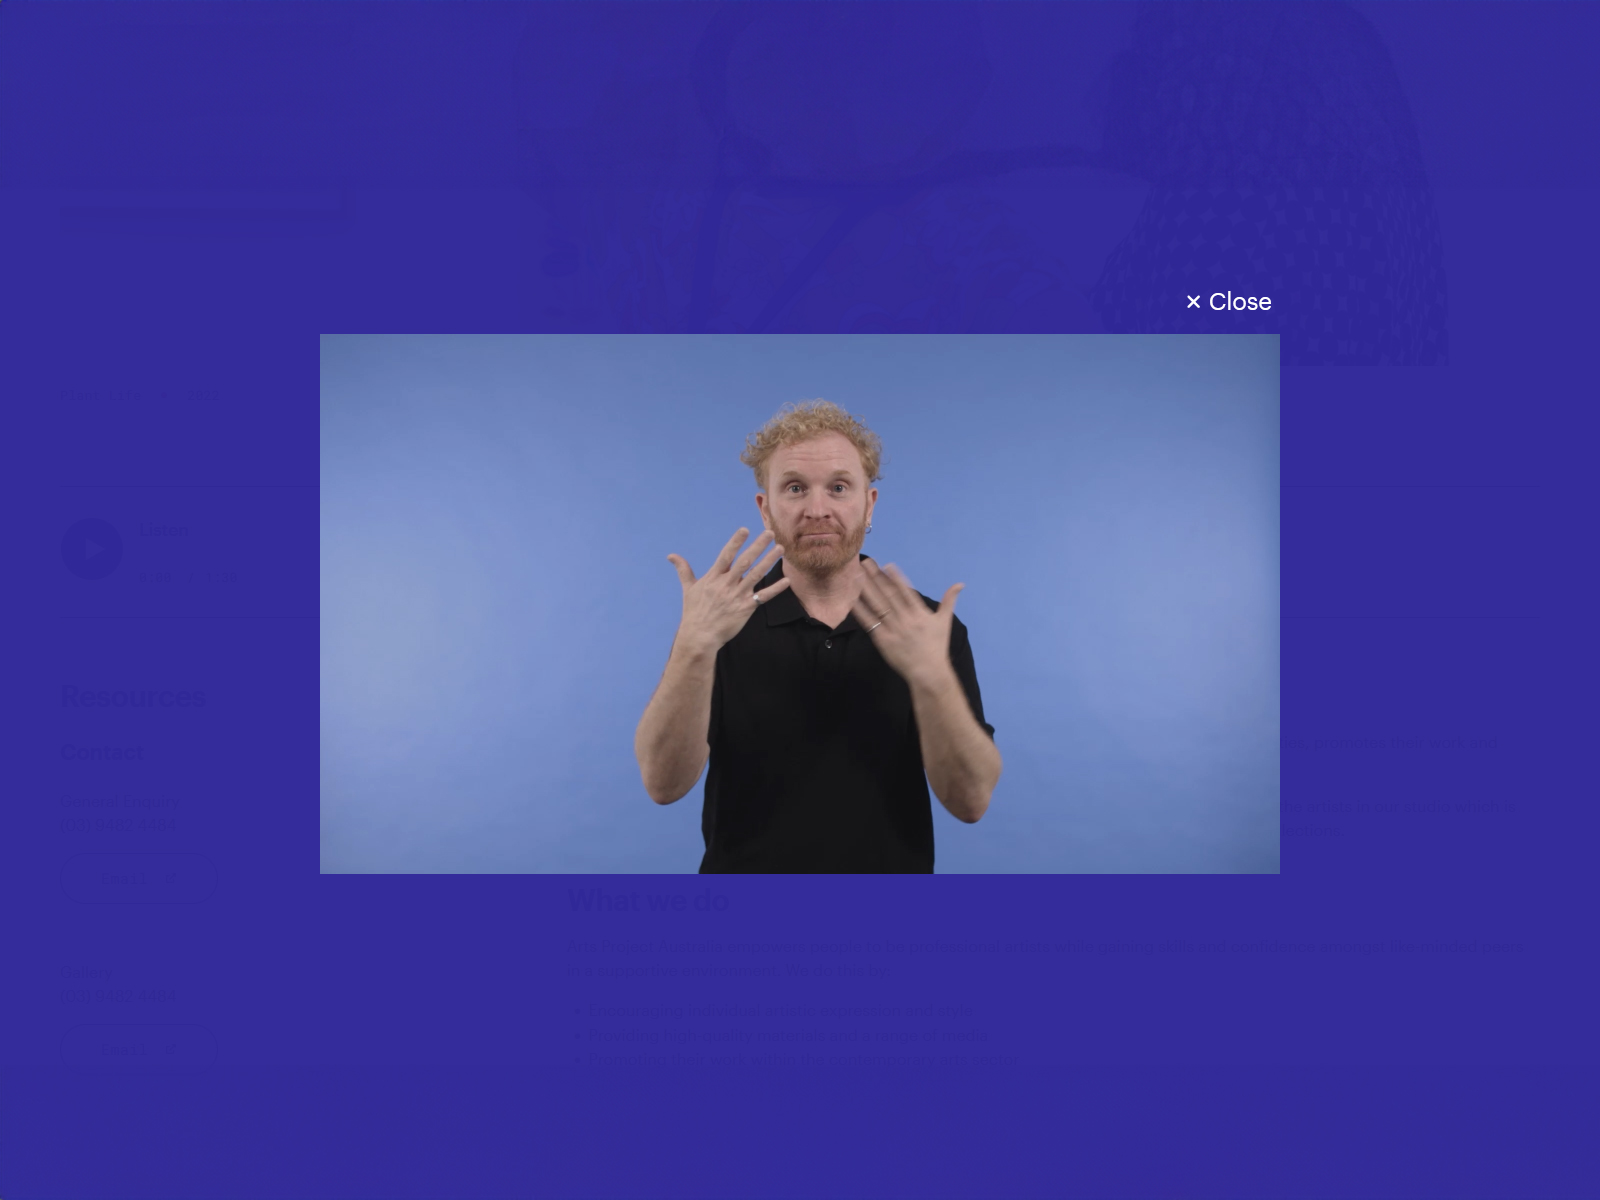 Accessibility - Sign Language Translations